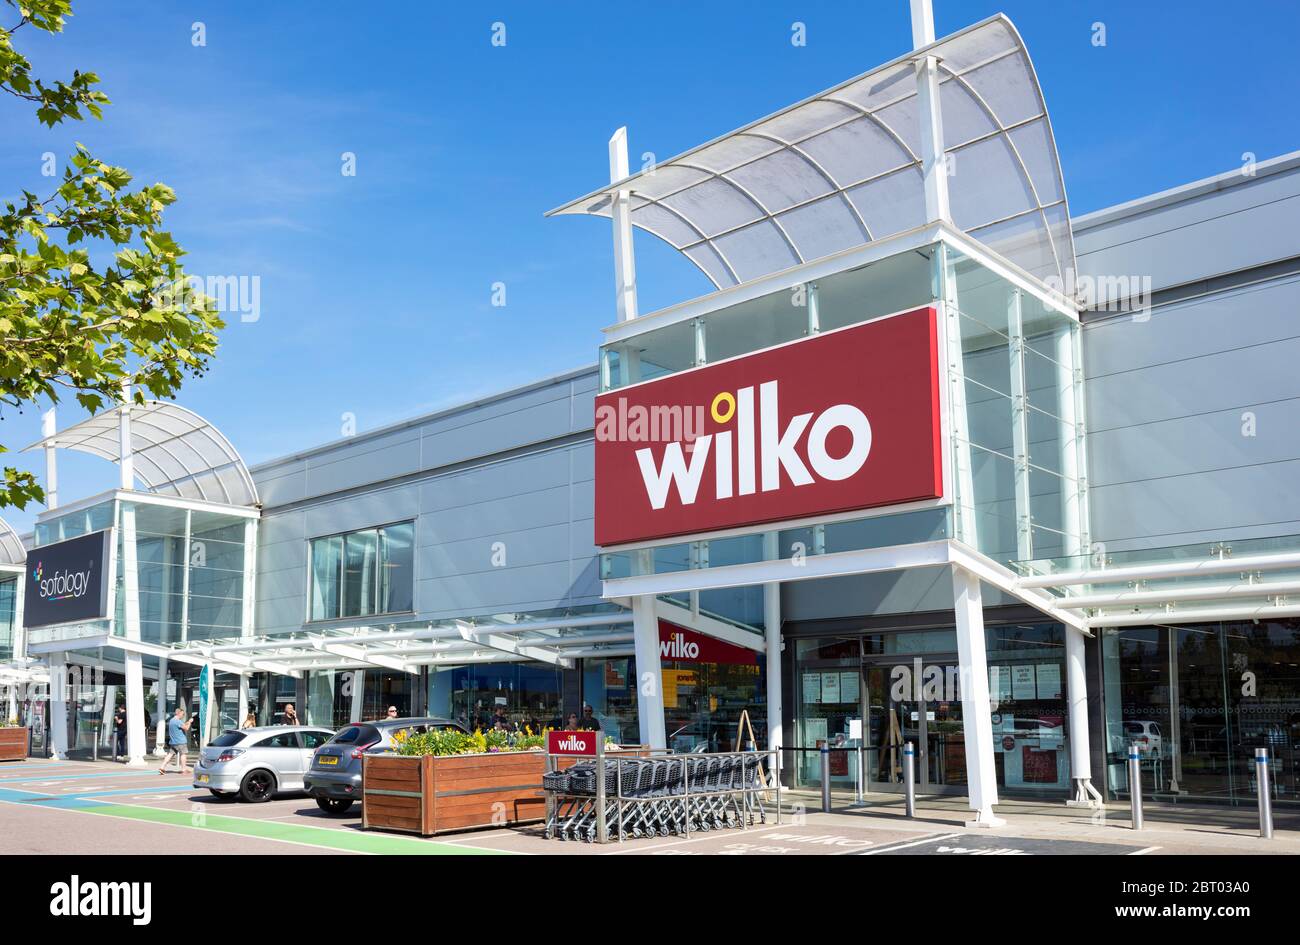 Wilko logo on a Wilko store front Giltbrook Retail Park, Ikea Way, Giltbrook,Nottingham East Midlands England UK GB Europe Stock Photo